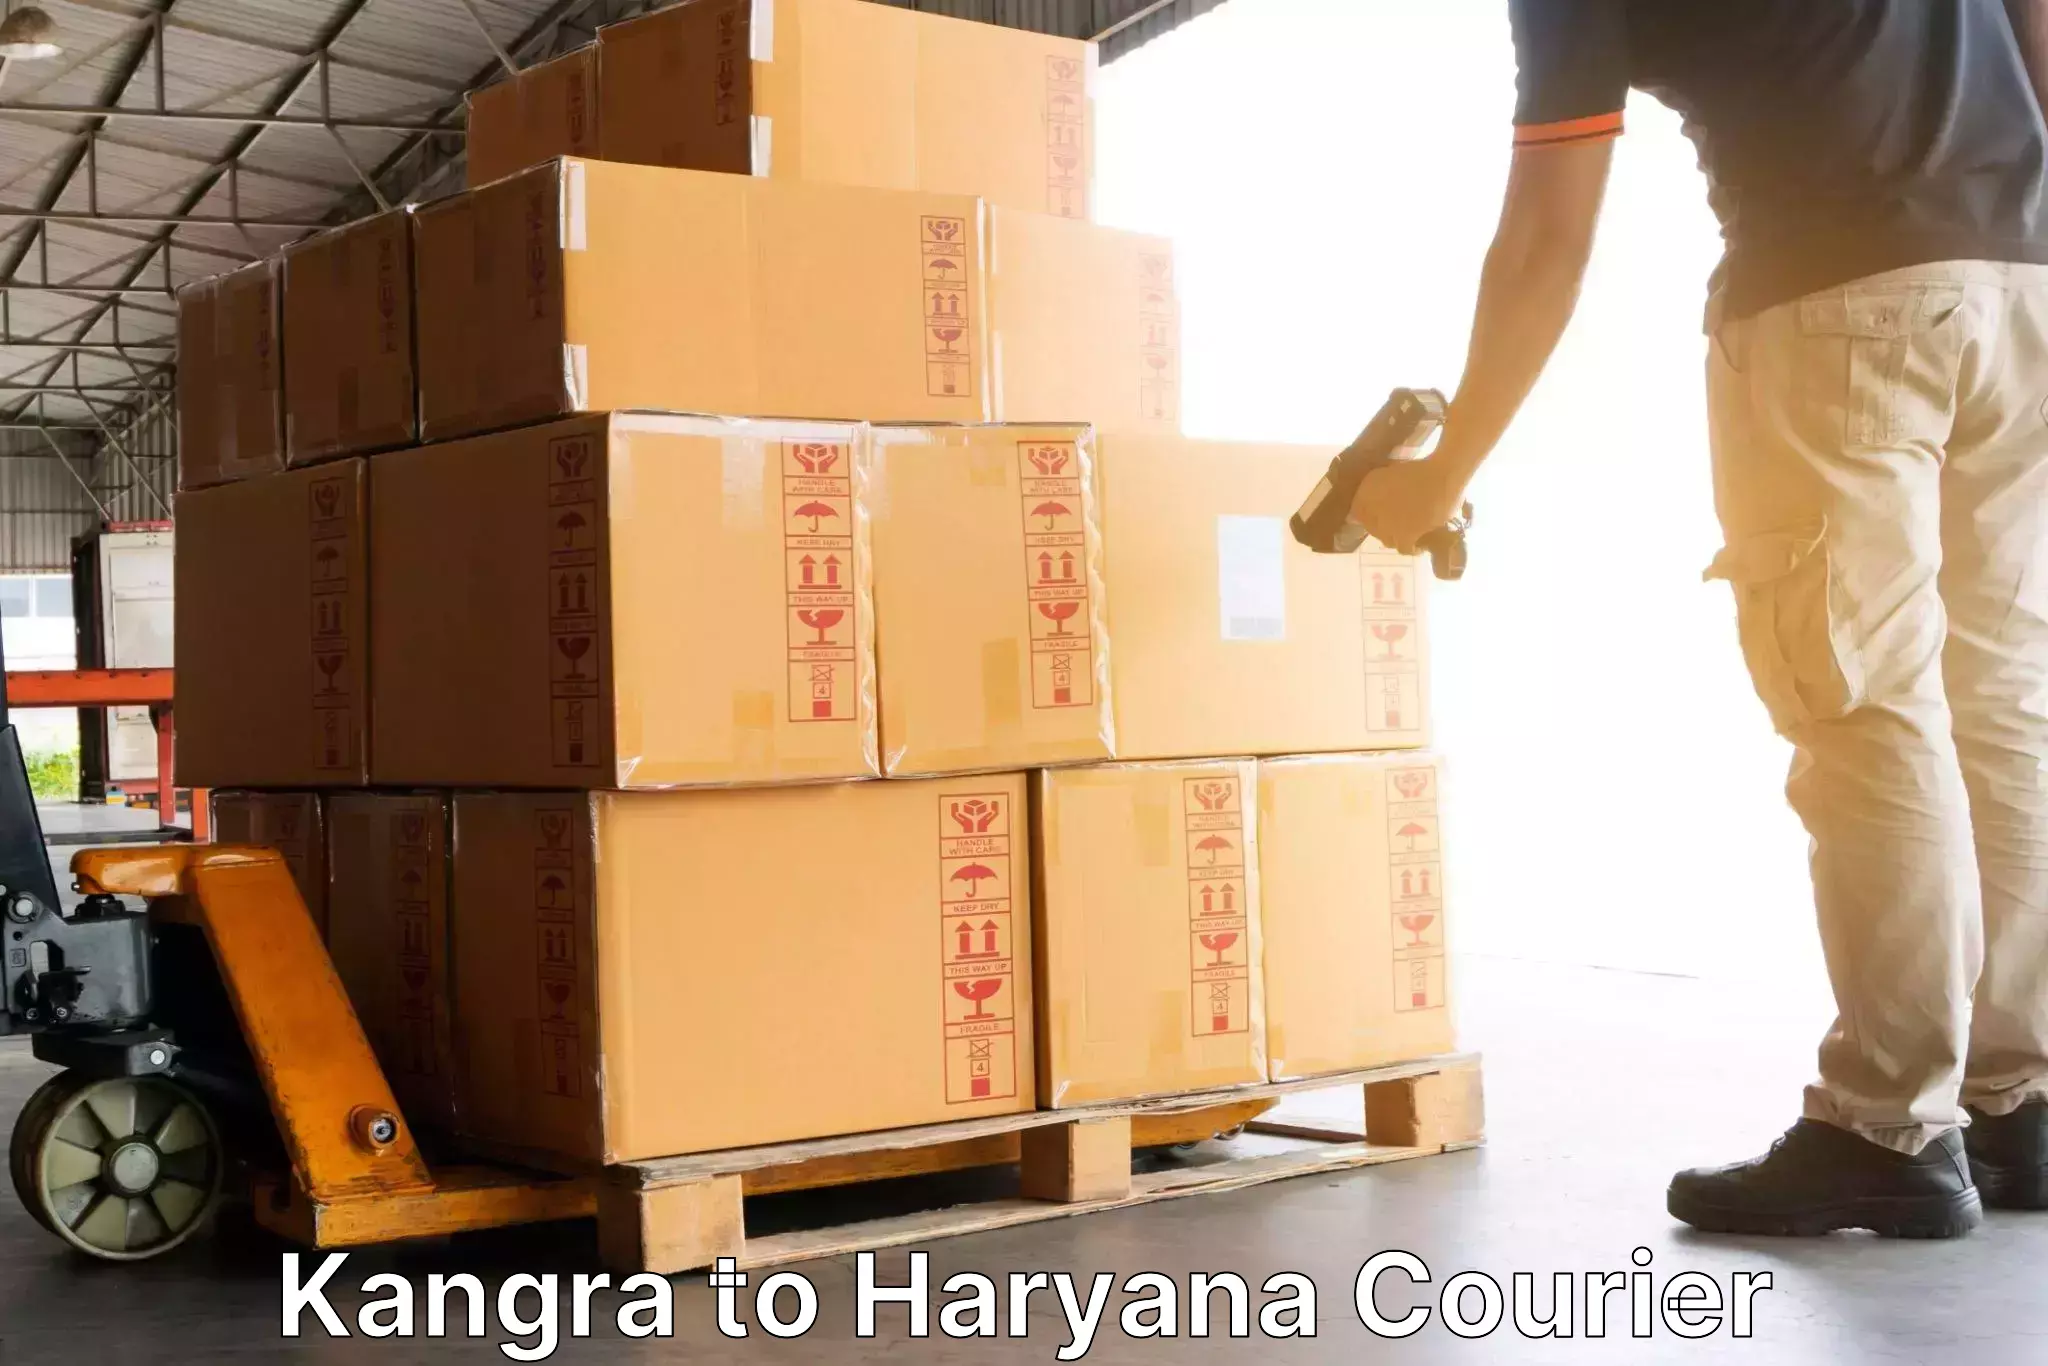 Courier service comparison Kangra to Loharu